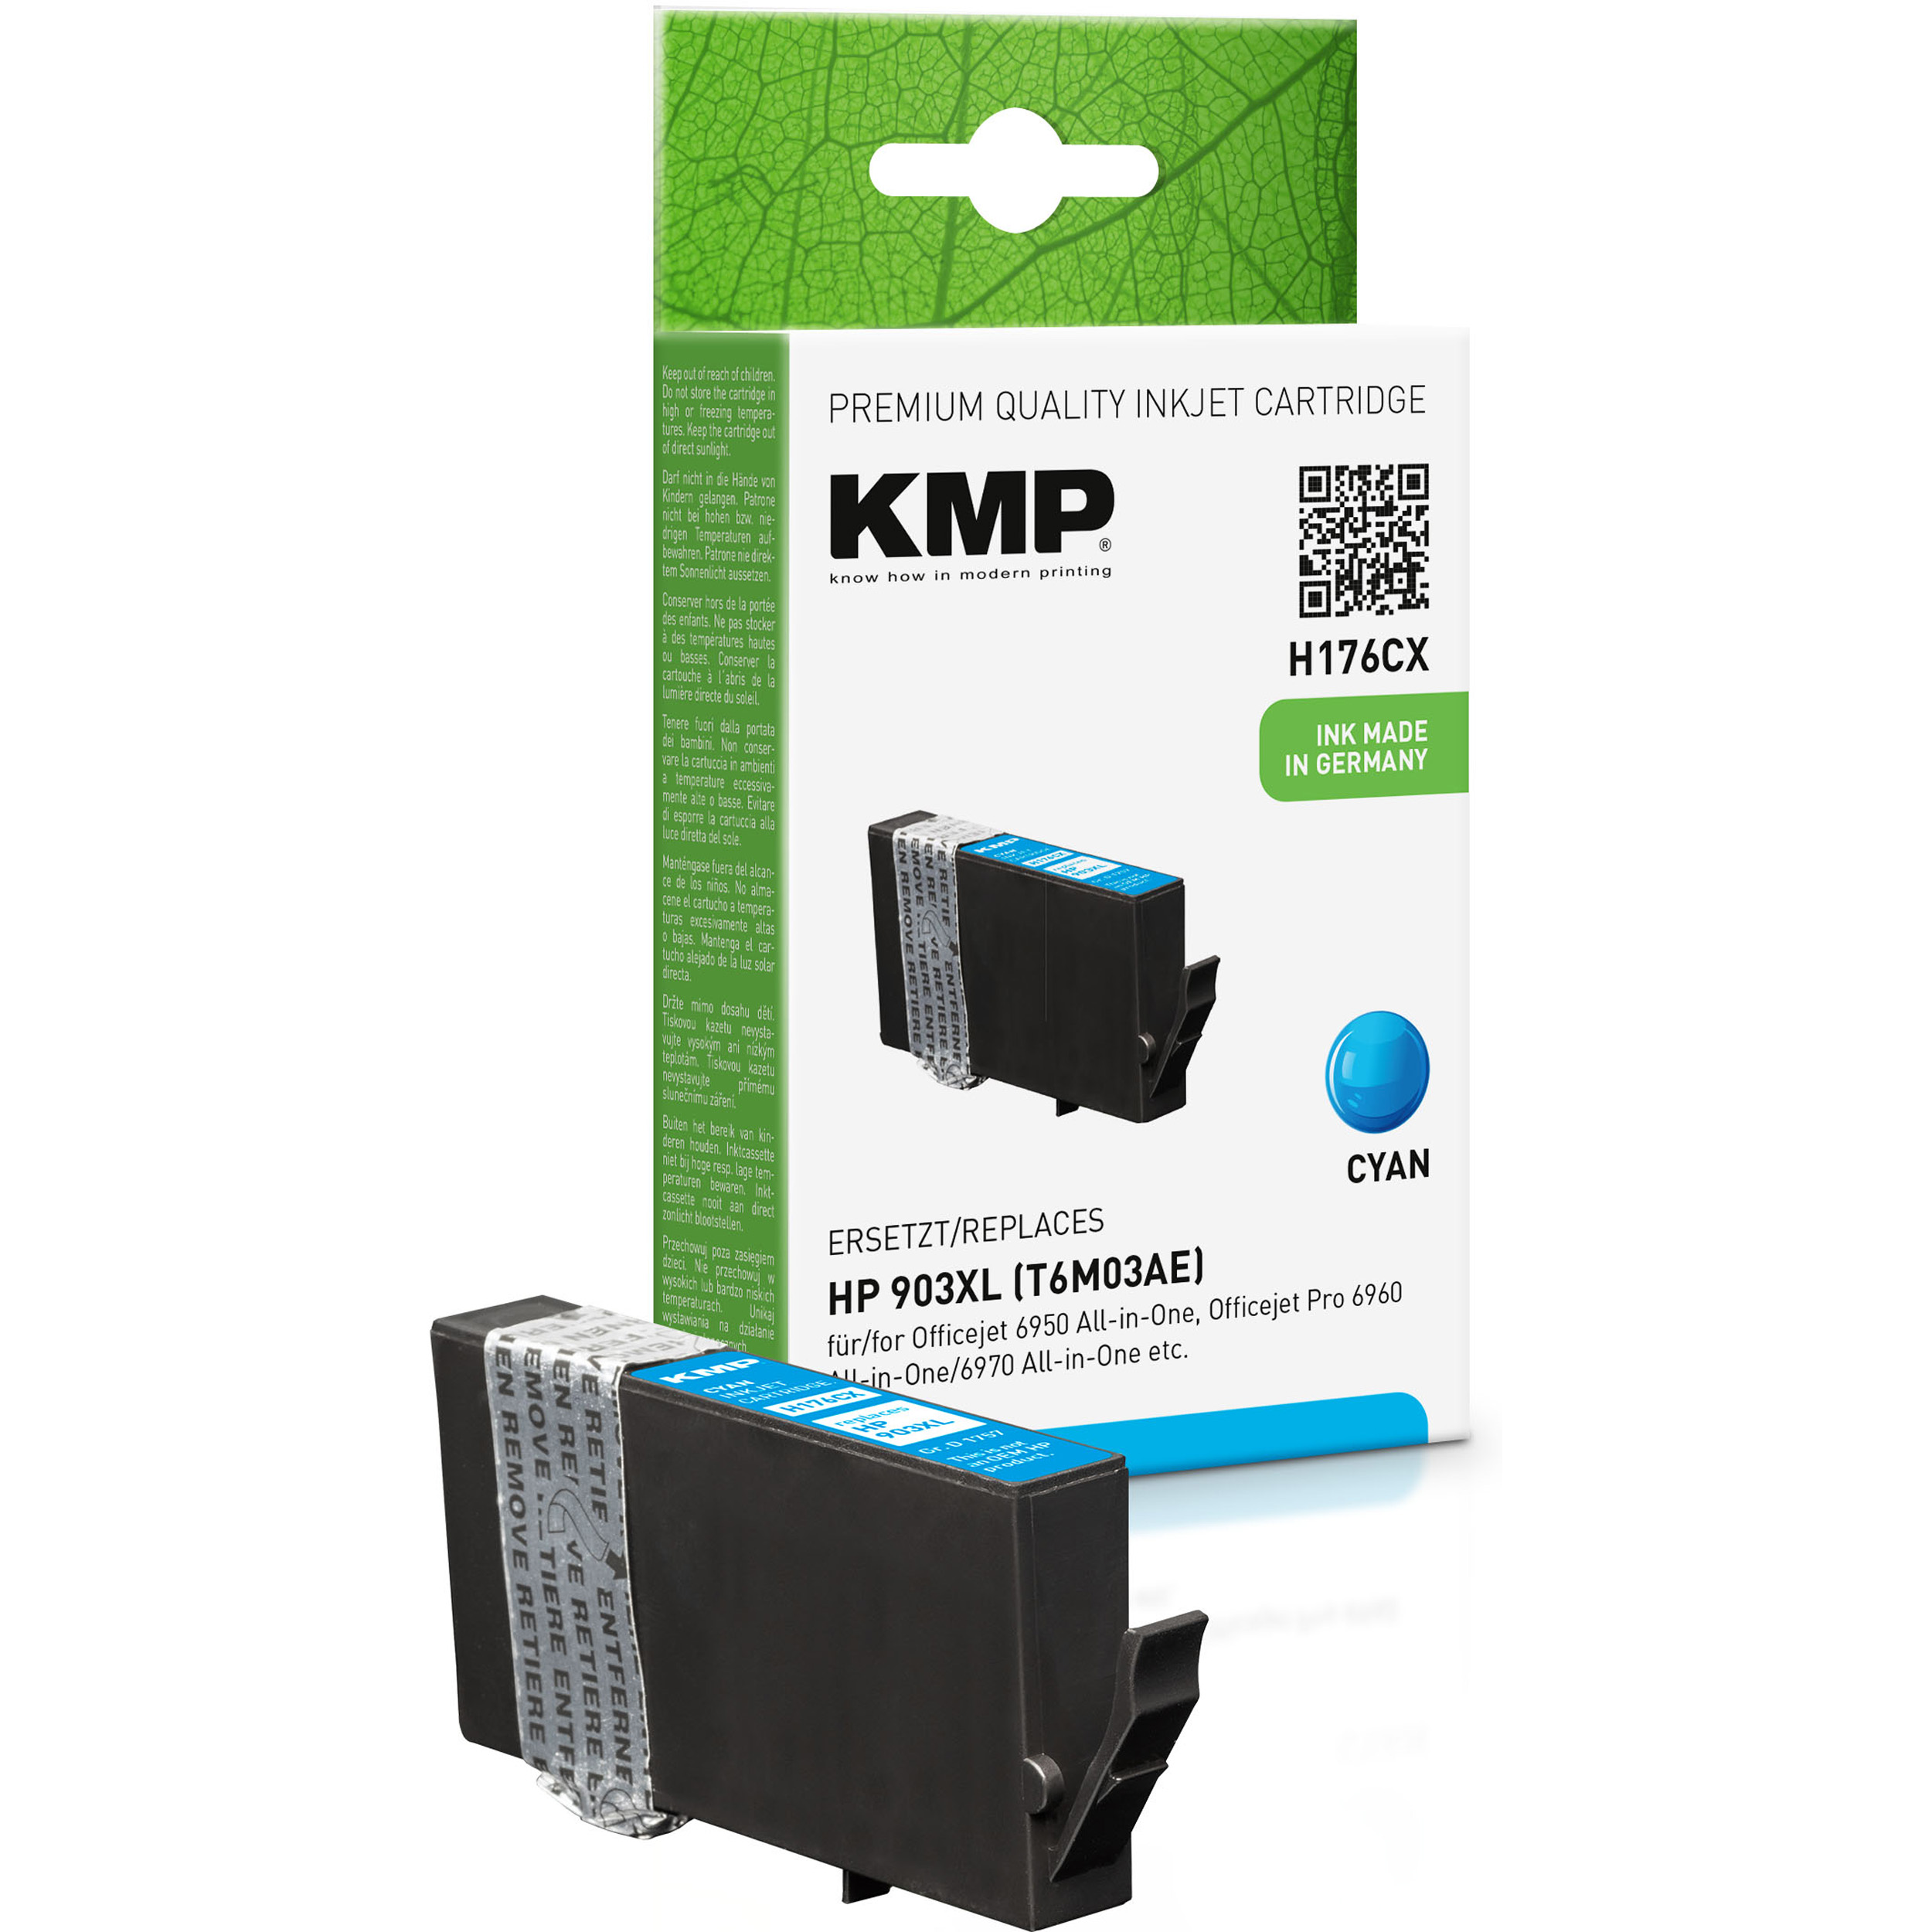 KMP (T6M03AE) 903XL Cartridge (T6M03AE) Tintenpatrone für Ink cyan Cyan HP